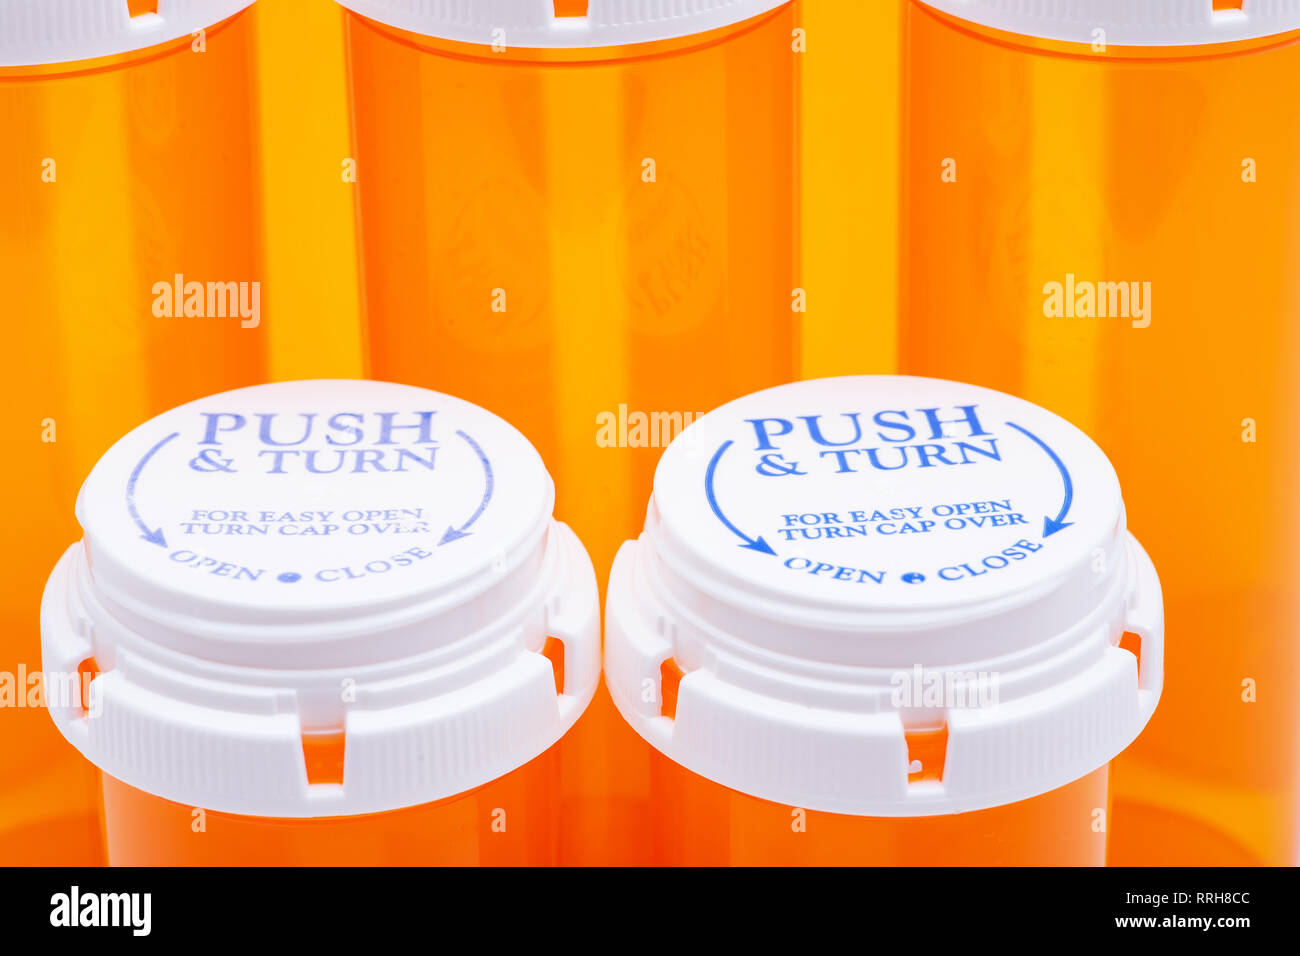 https://c8.alamy.com/comp/RRH8CC/orange-plastic-empty-prescription-containers-with-child-resistant-pushturn-cap-RRH8CC.jpg